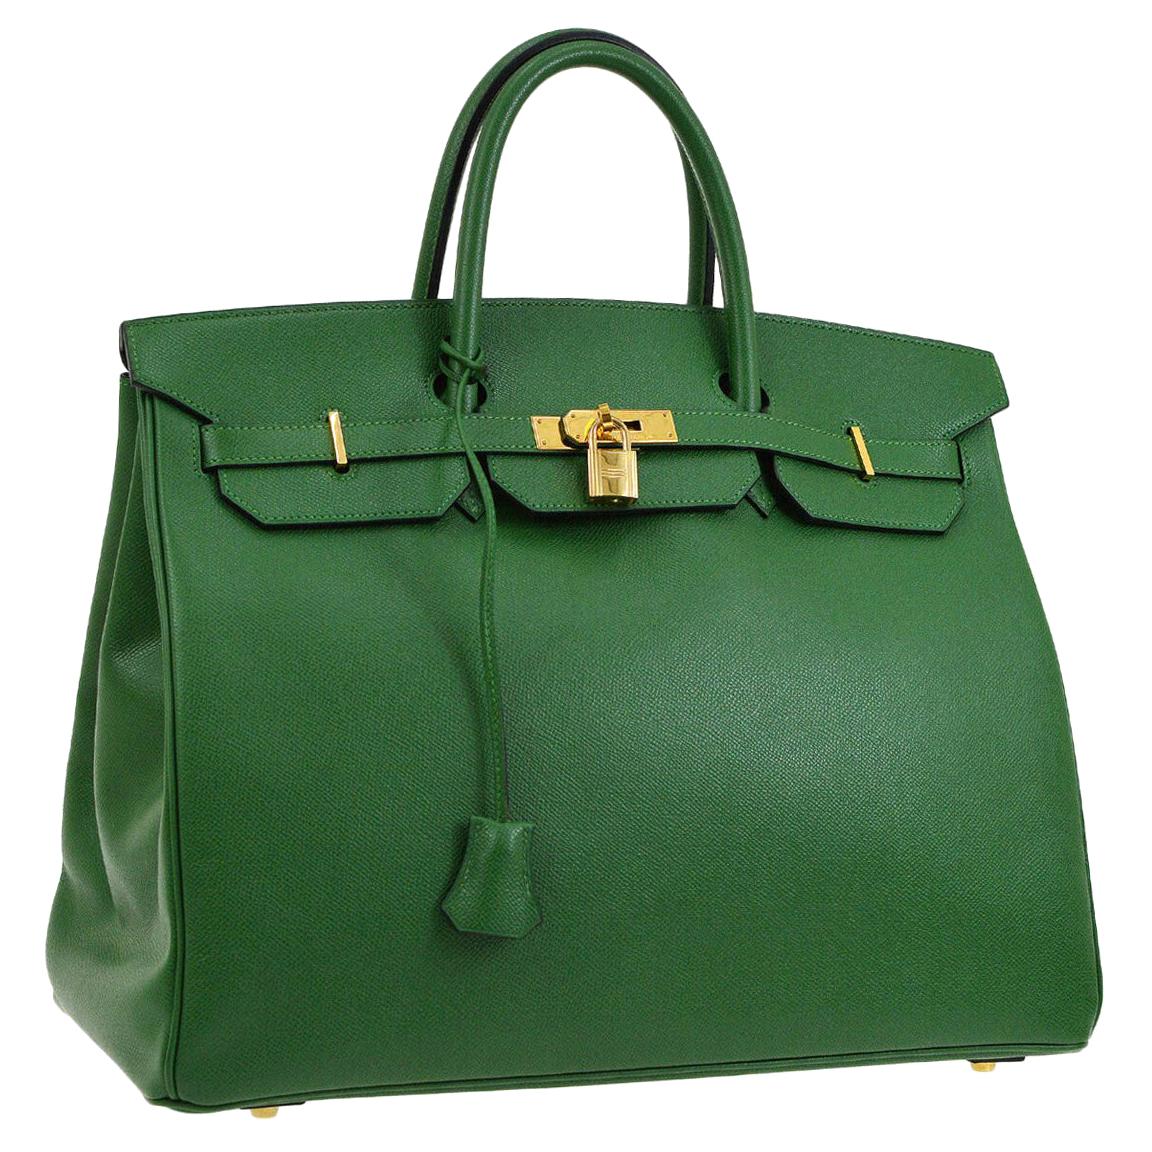 Hermes Birkin 40 Green Leather Gold Carryall Travel Top Handle Satchel Tote Bag